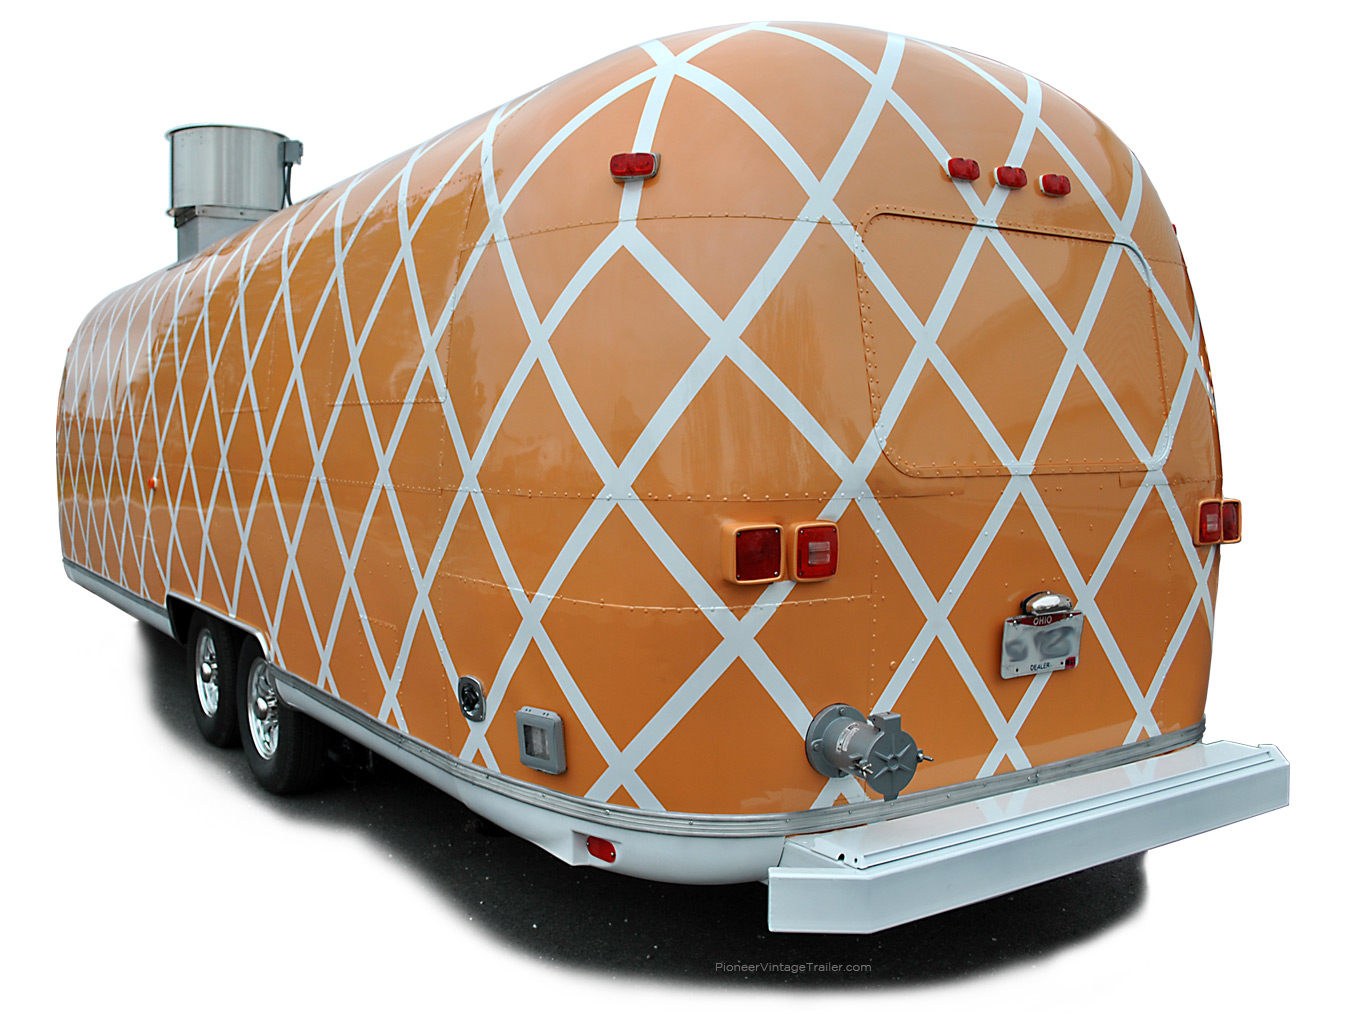 Airstream Argosy orange food service trailer